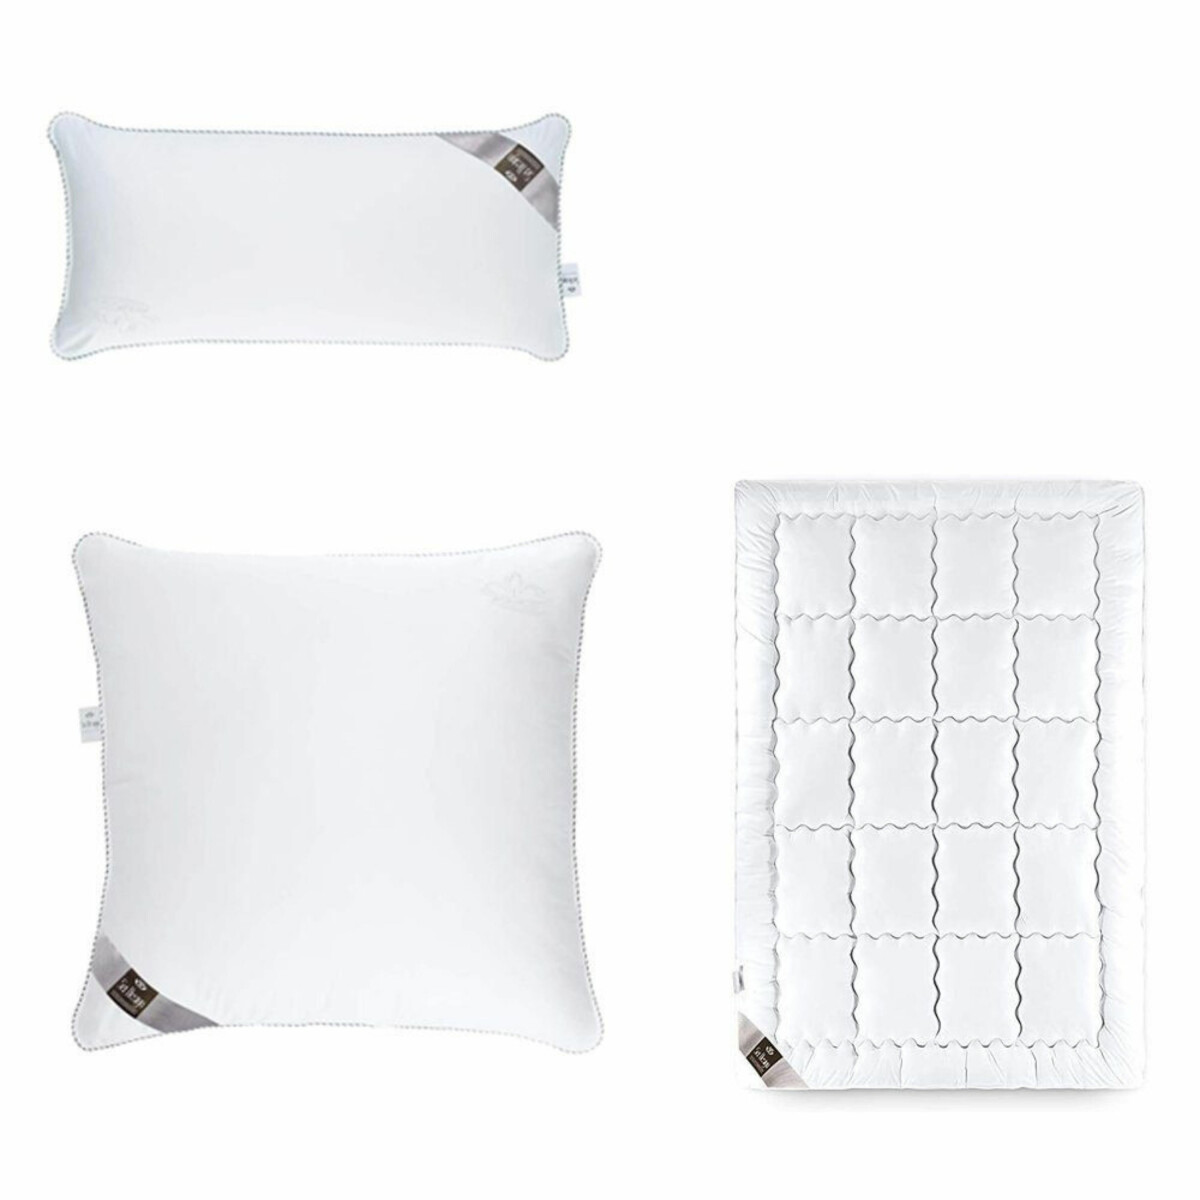 Orthopädisches Kopfkissen The Pillow Normal Standard